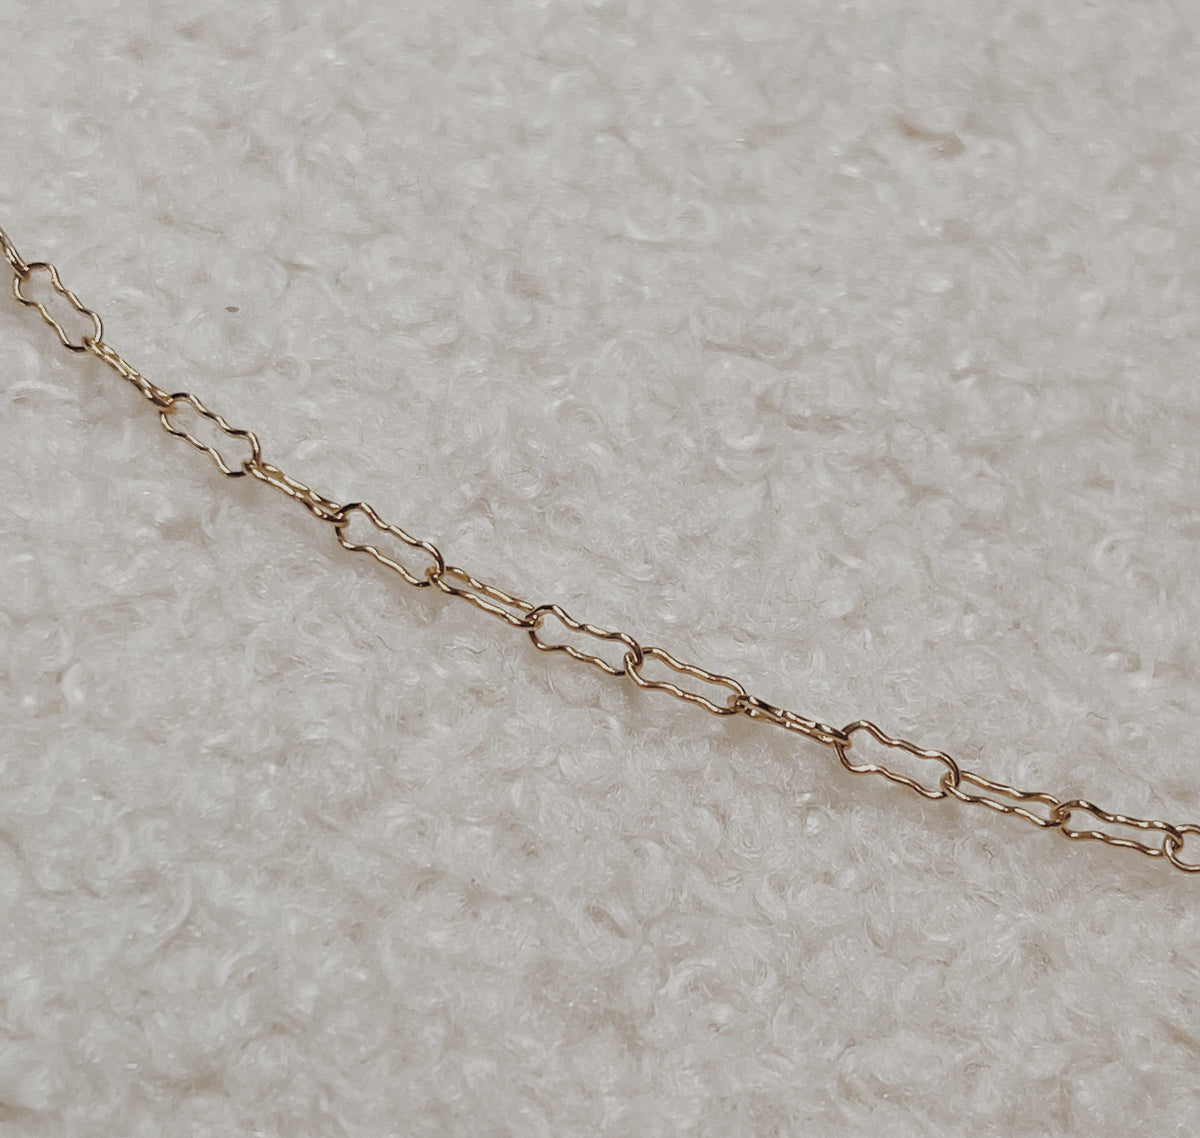 Permanent Jewelry- Necklaces